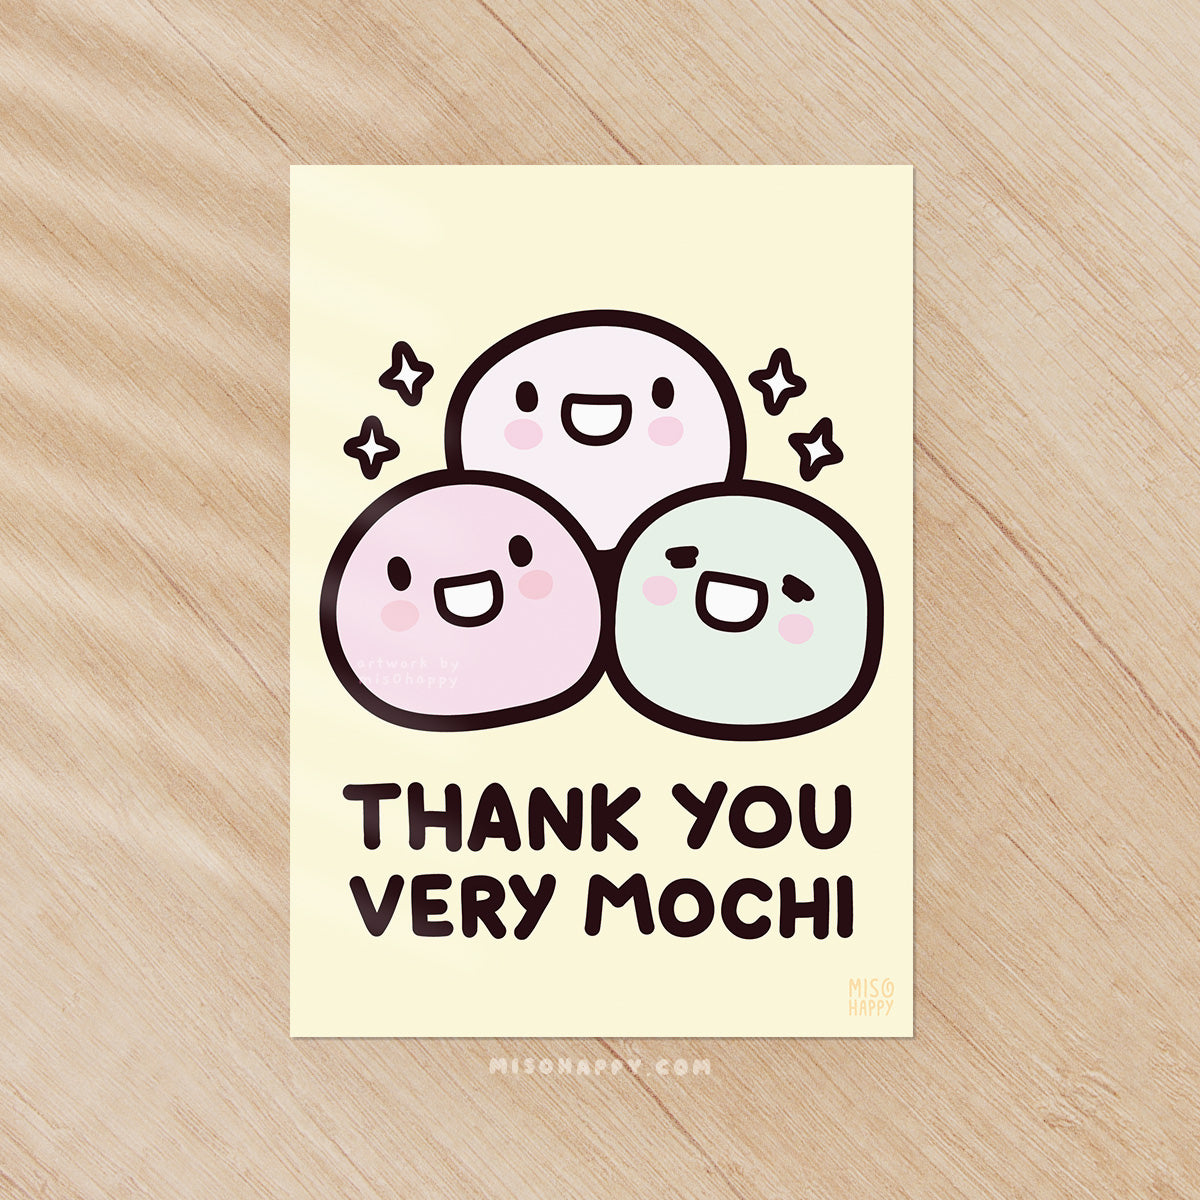 "Thank You Very Mochi!" Print